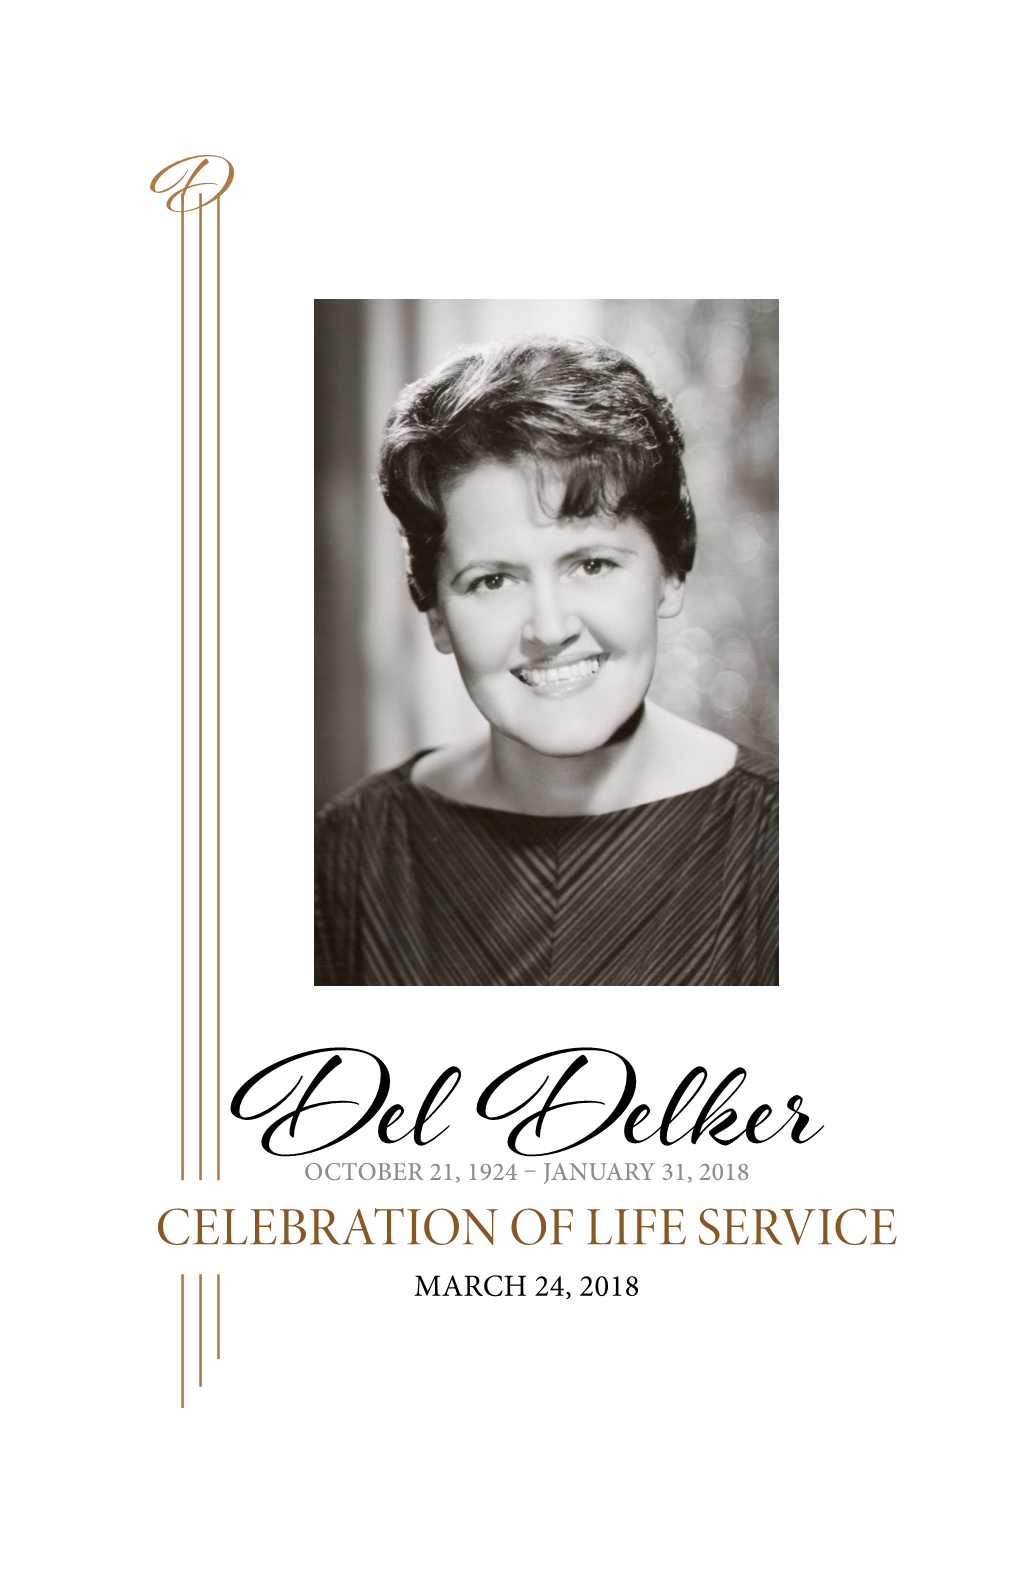 Del Delker of LIFE SERVICE MARCH 24, 2018 Celebration of Life Service Prelude